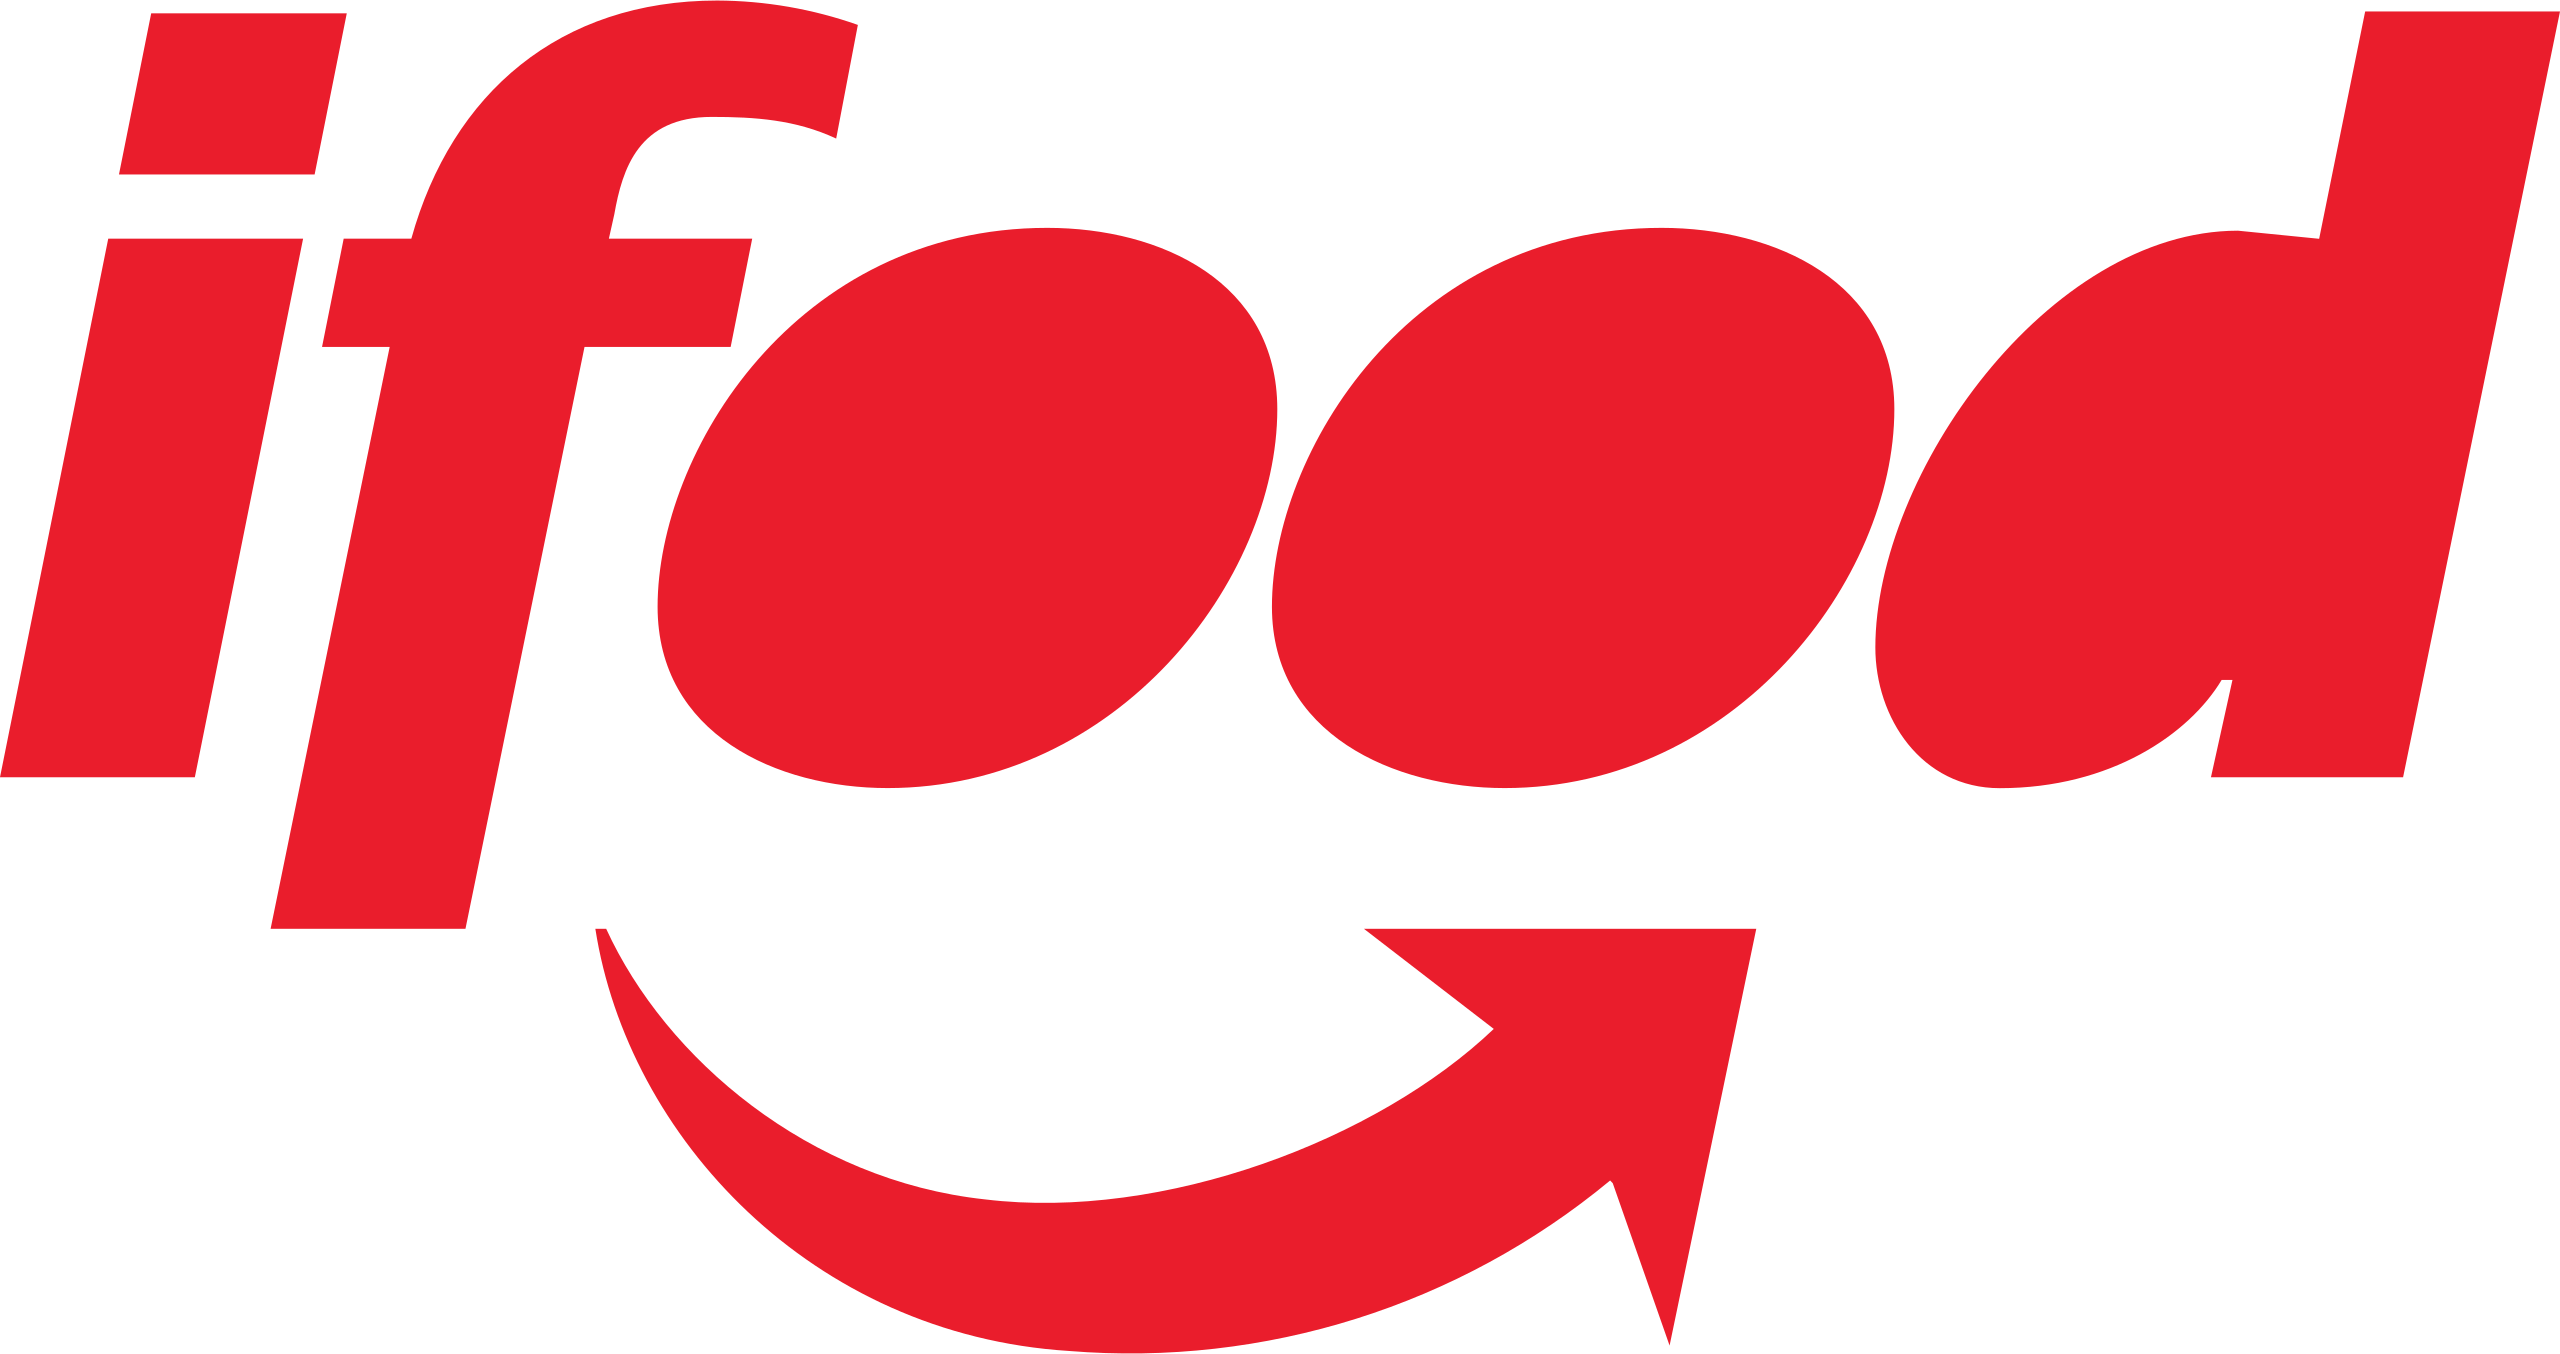 Ifood logo.svg